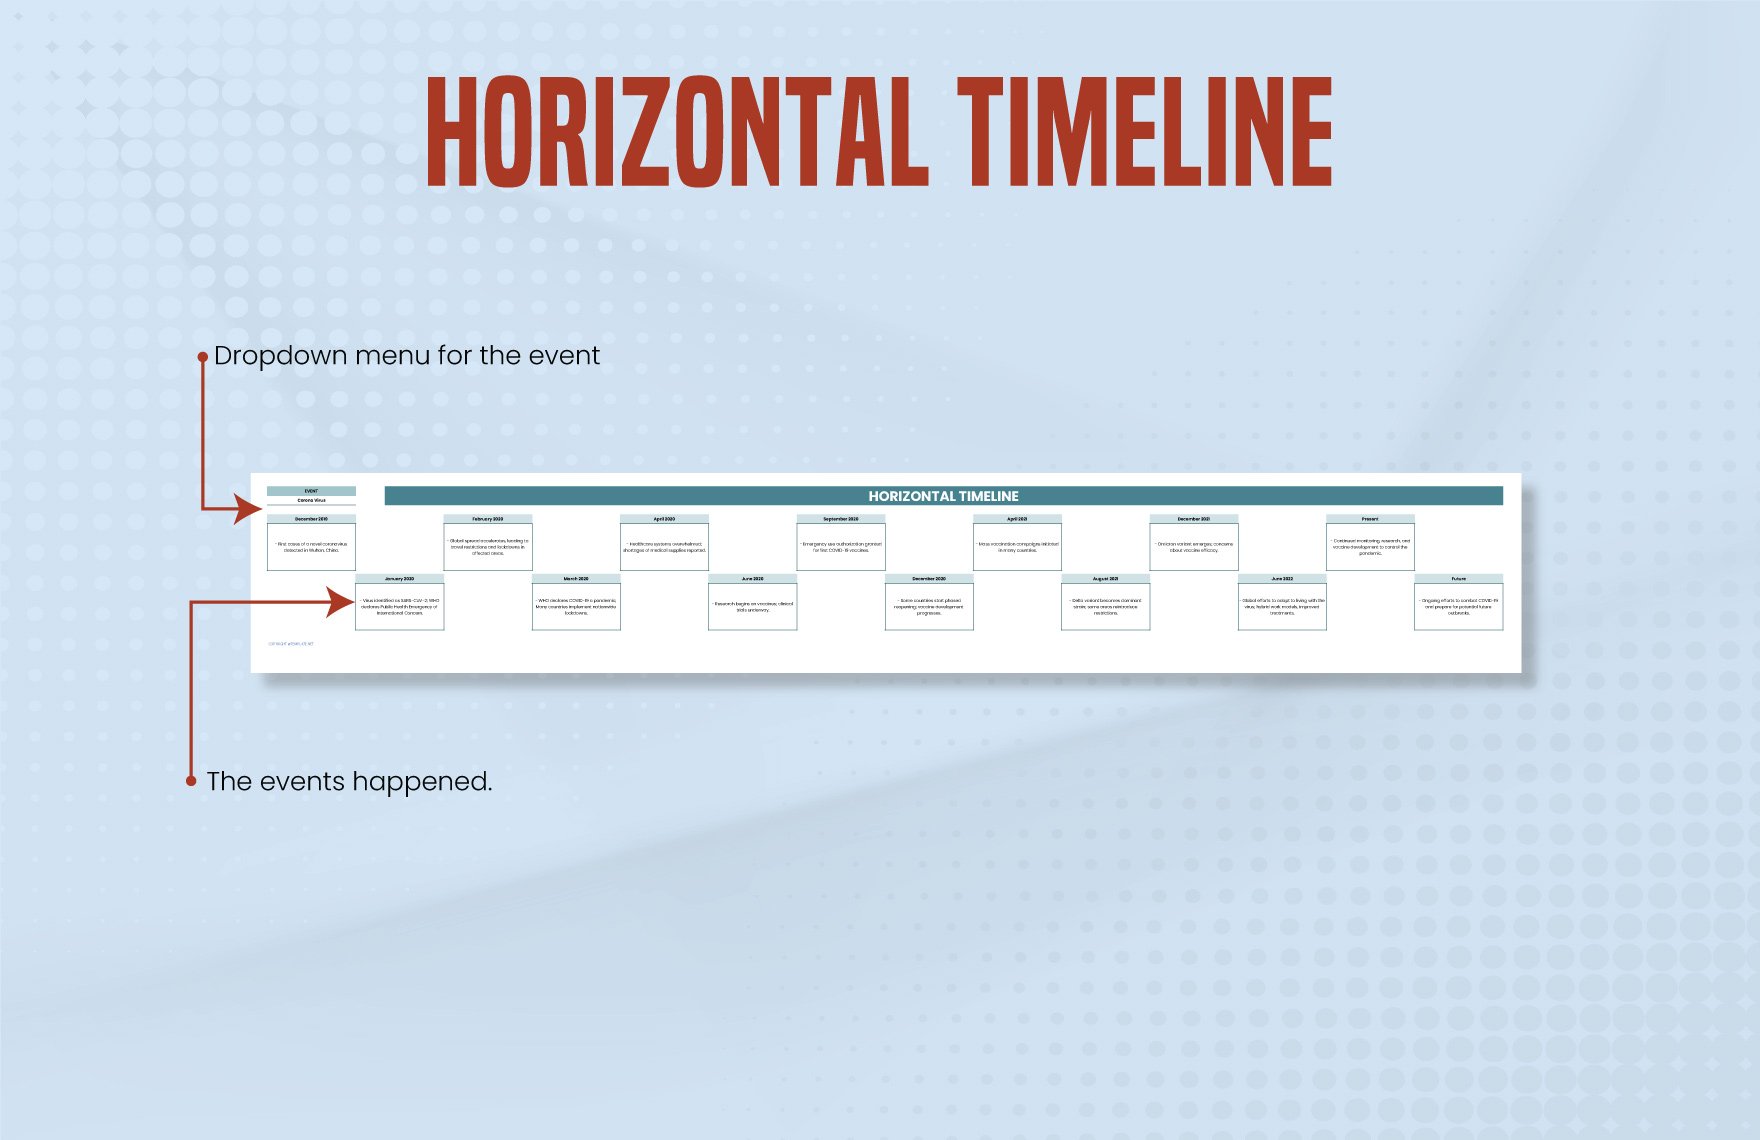 Horizontal Timeline Template